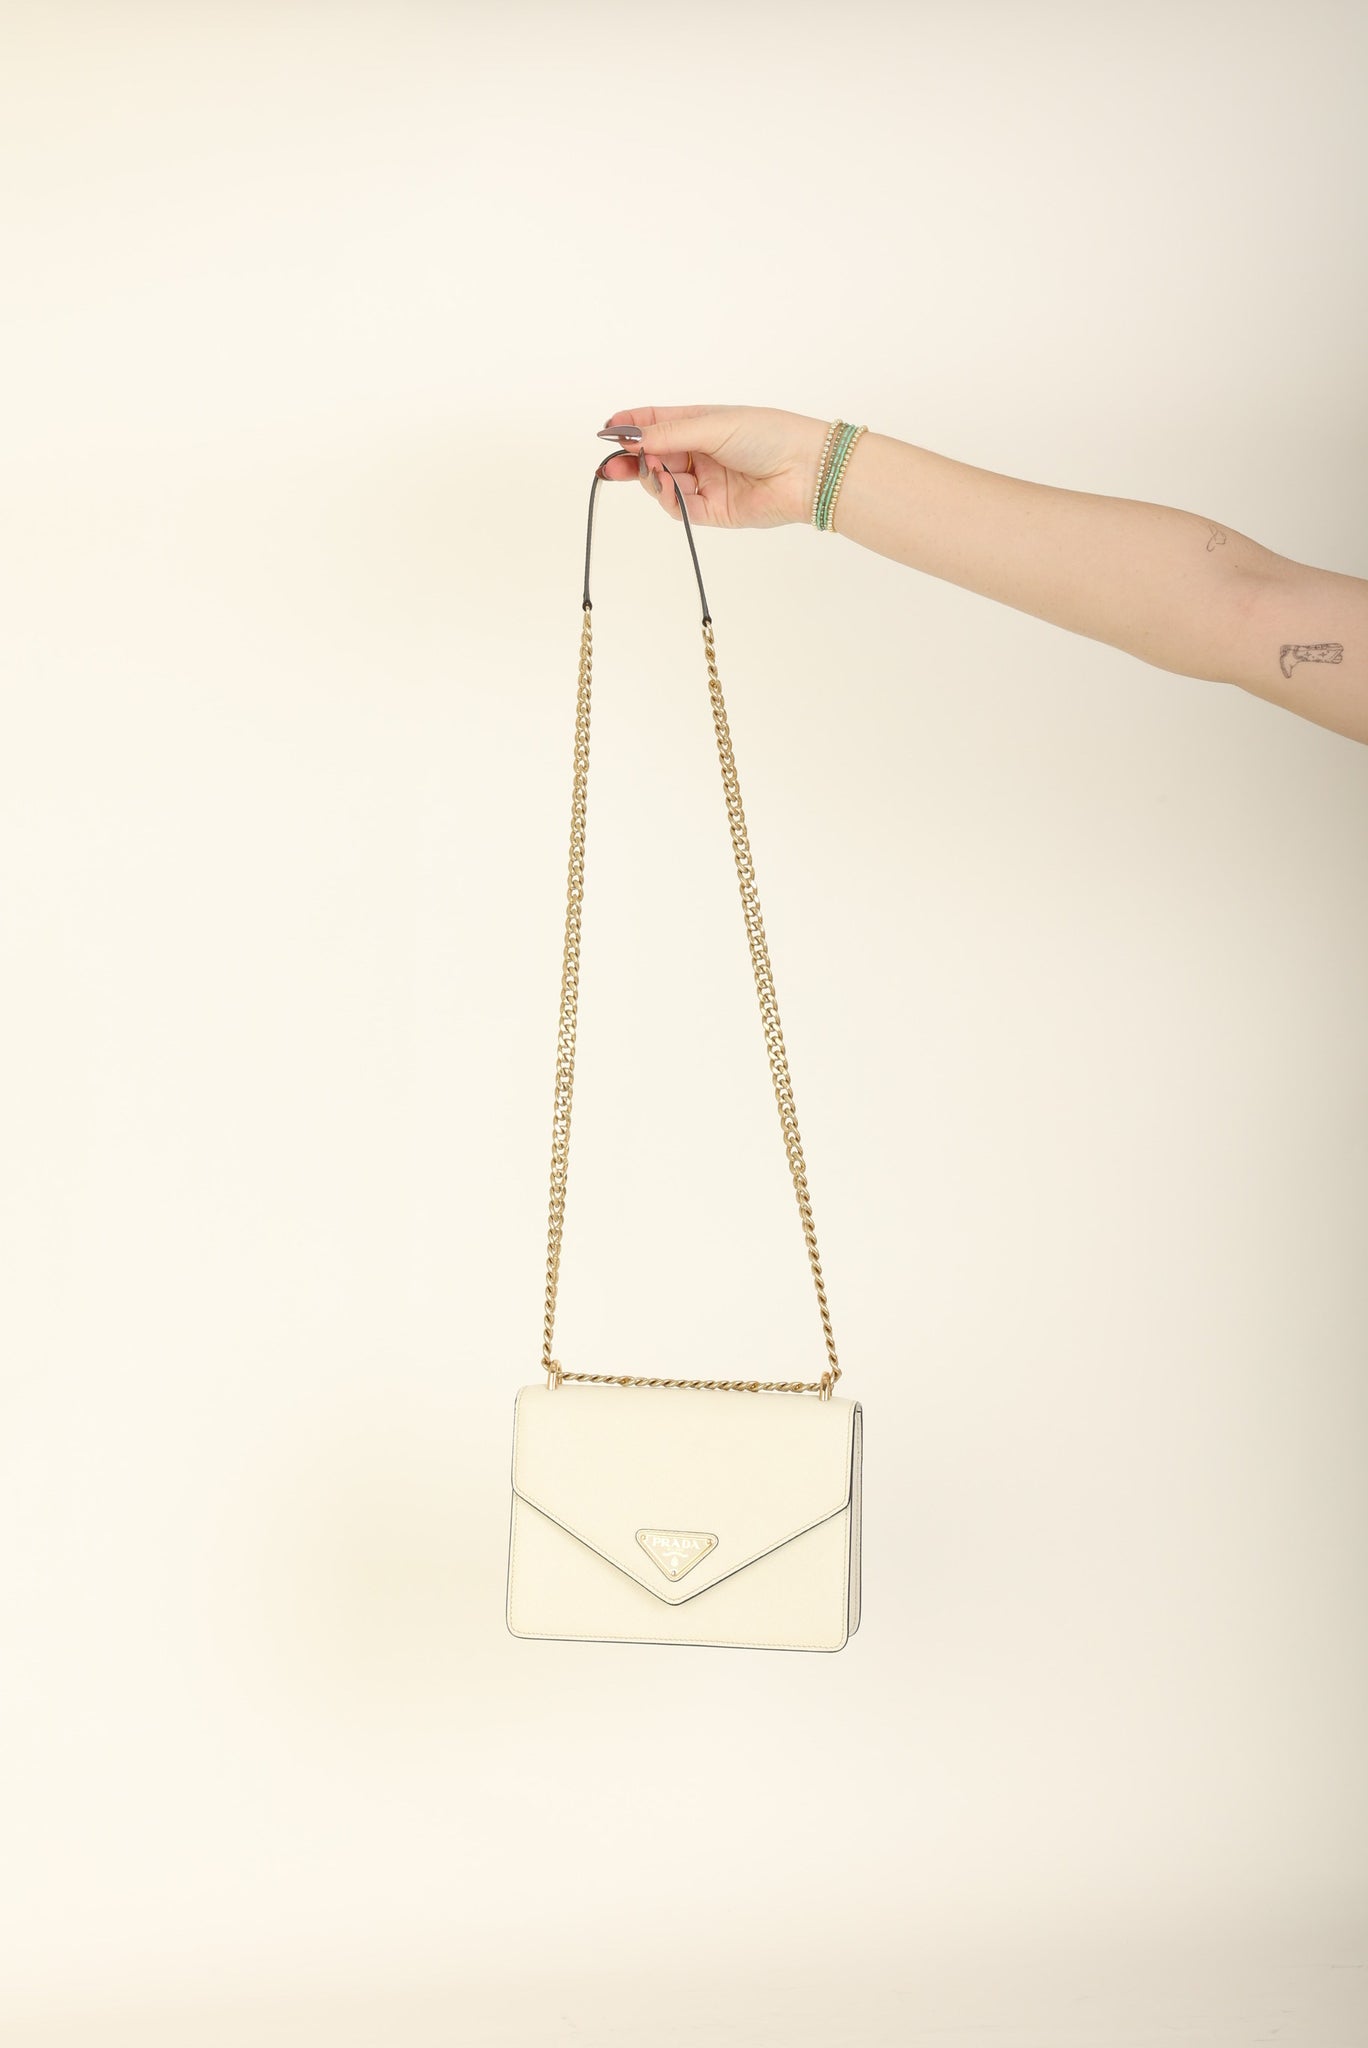 Prada Saffiano Chain Crossbody Bag